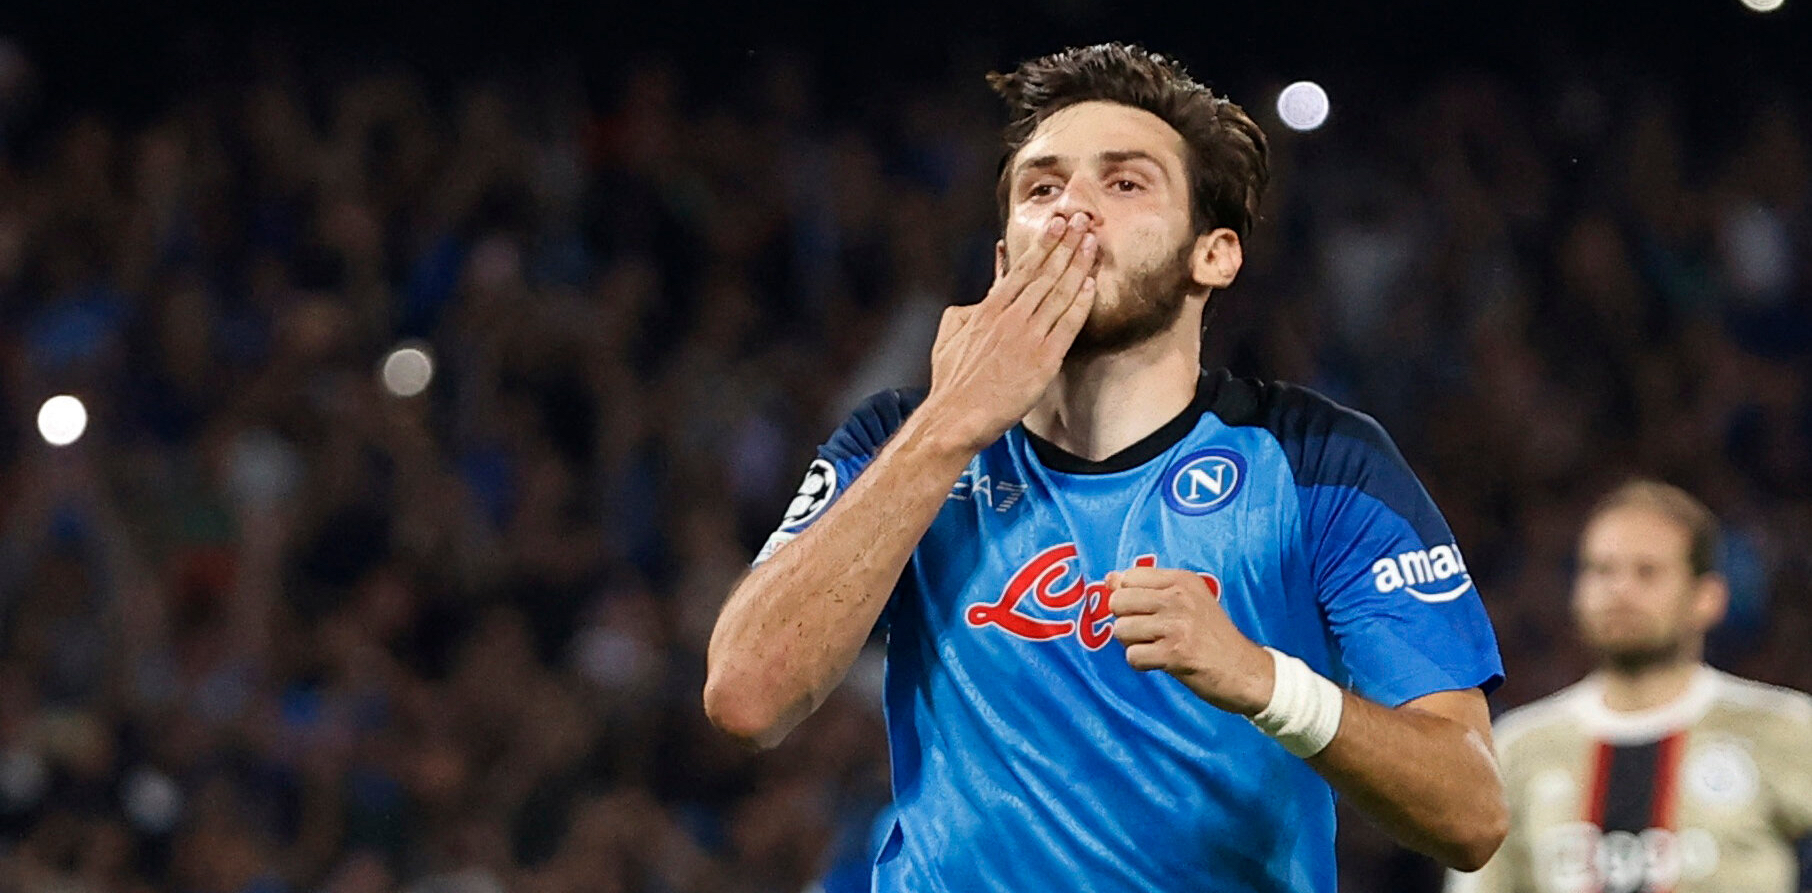 Petinggi UEFA Yakin Napoli Mampu Juara Serie A dan Champions League